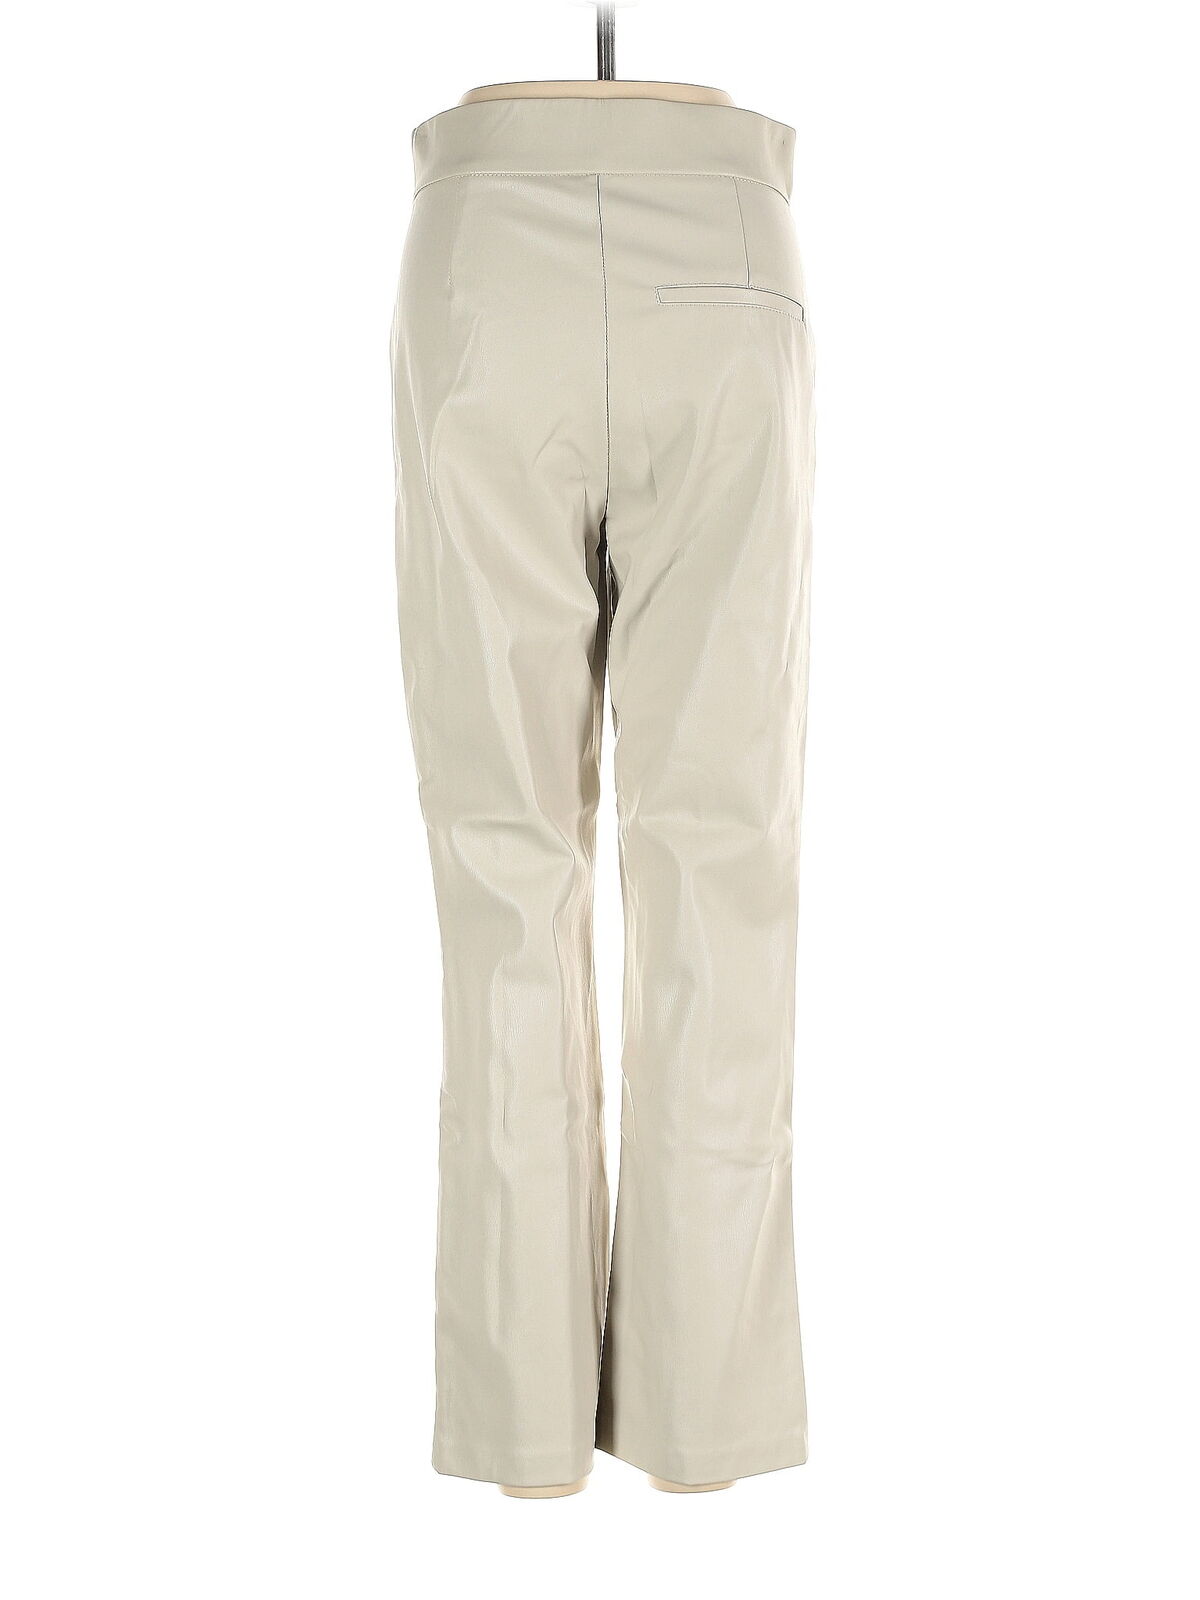 Zara Women Ivory Casual Pants S - image 2